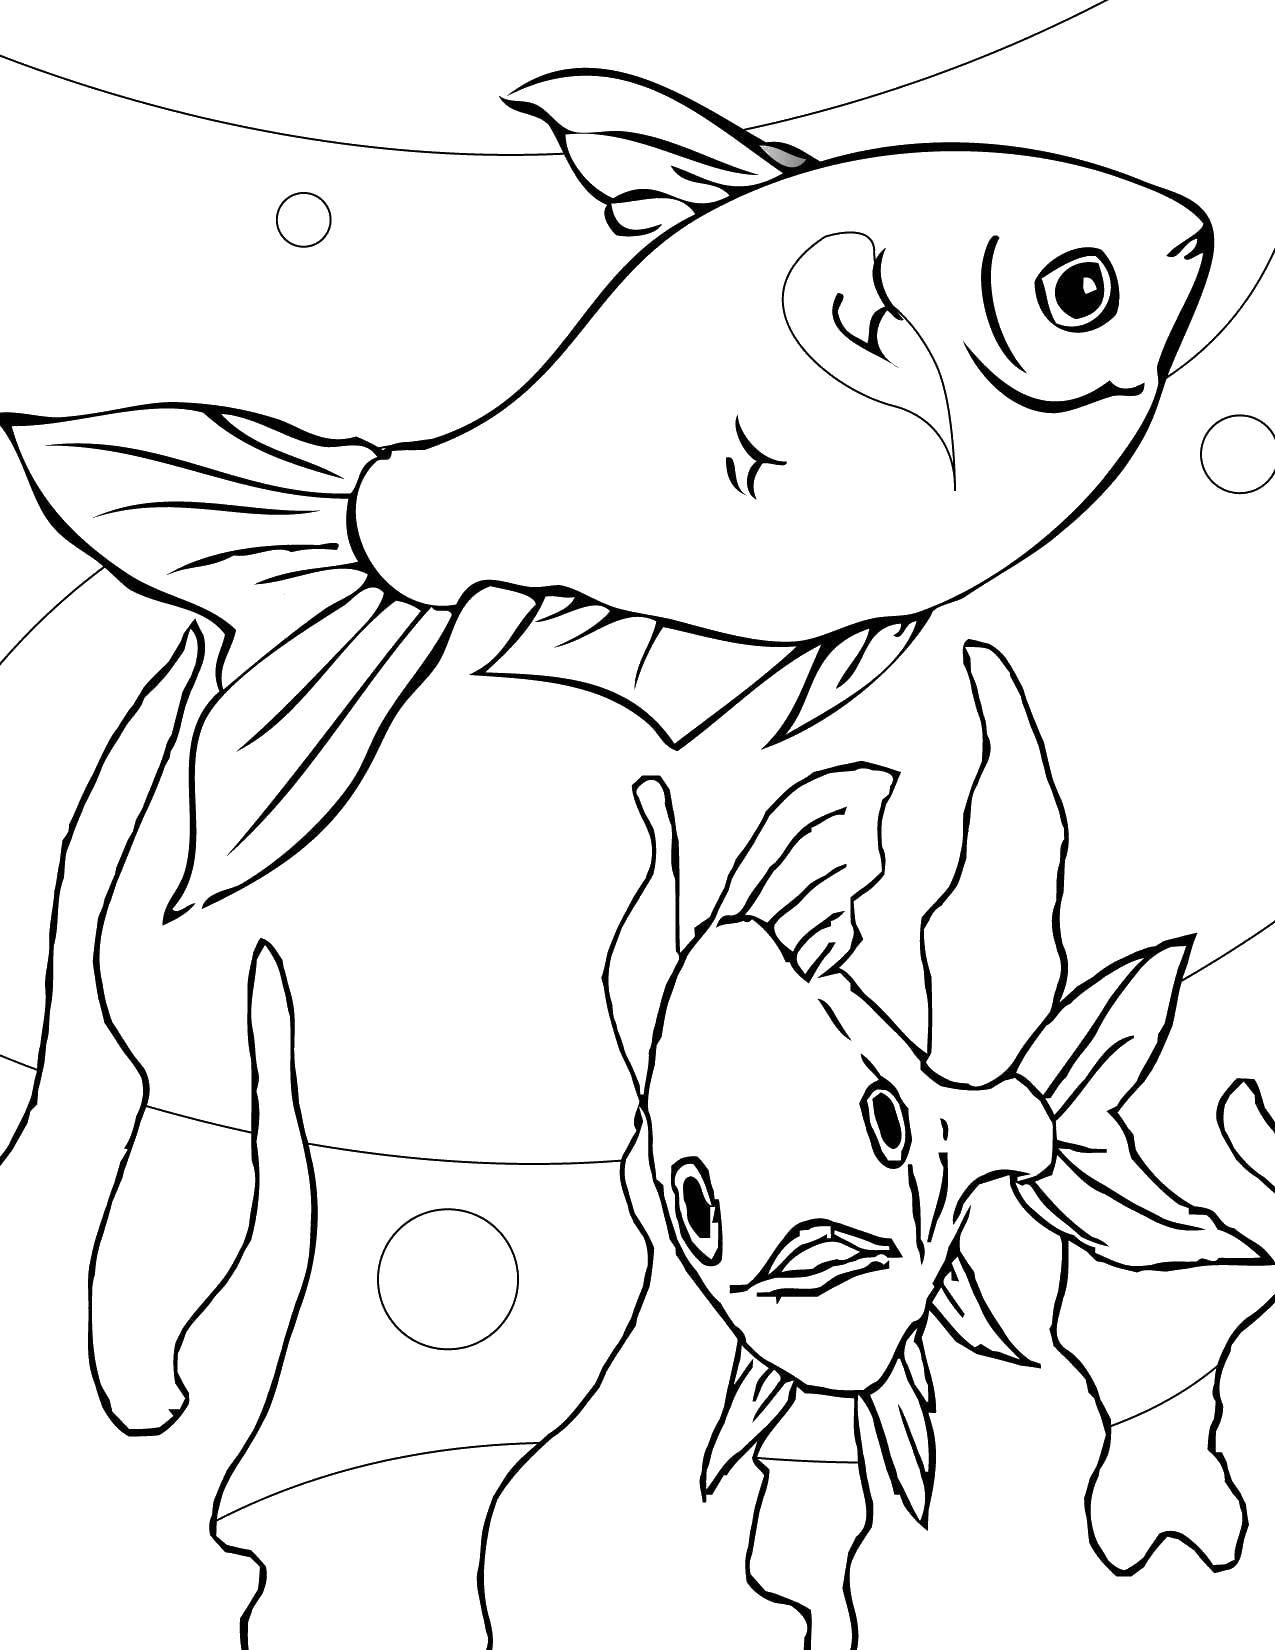 Coloring Fish swim in the aquarium. Category fish. Tags:  Aquarium, fish, water, bubbles.